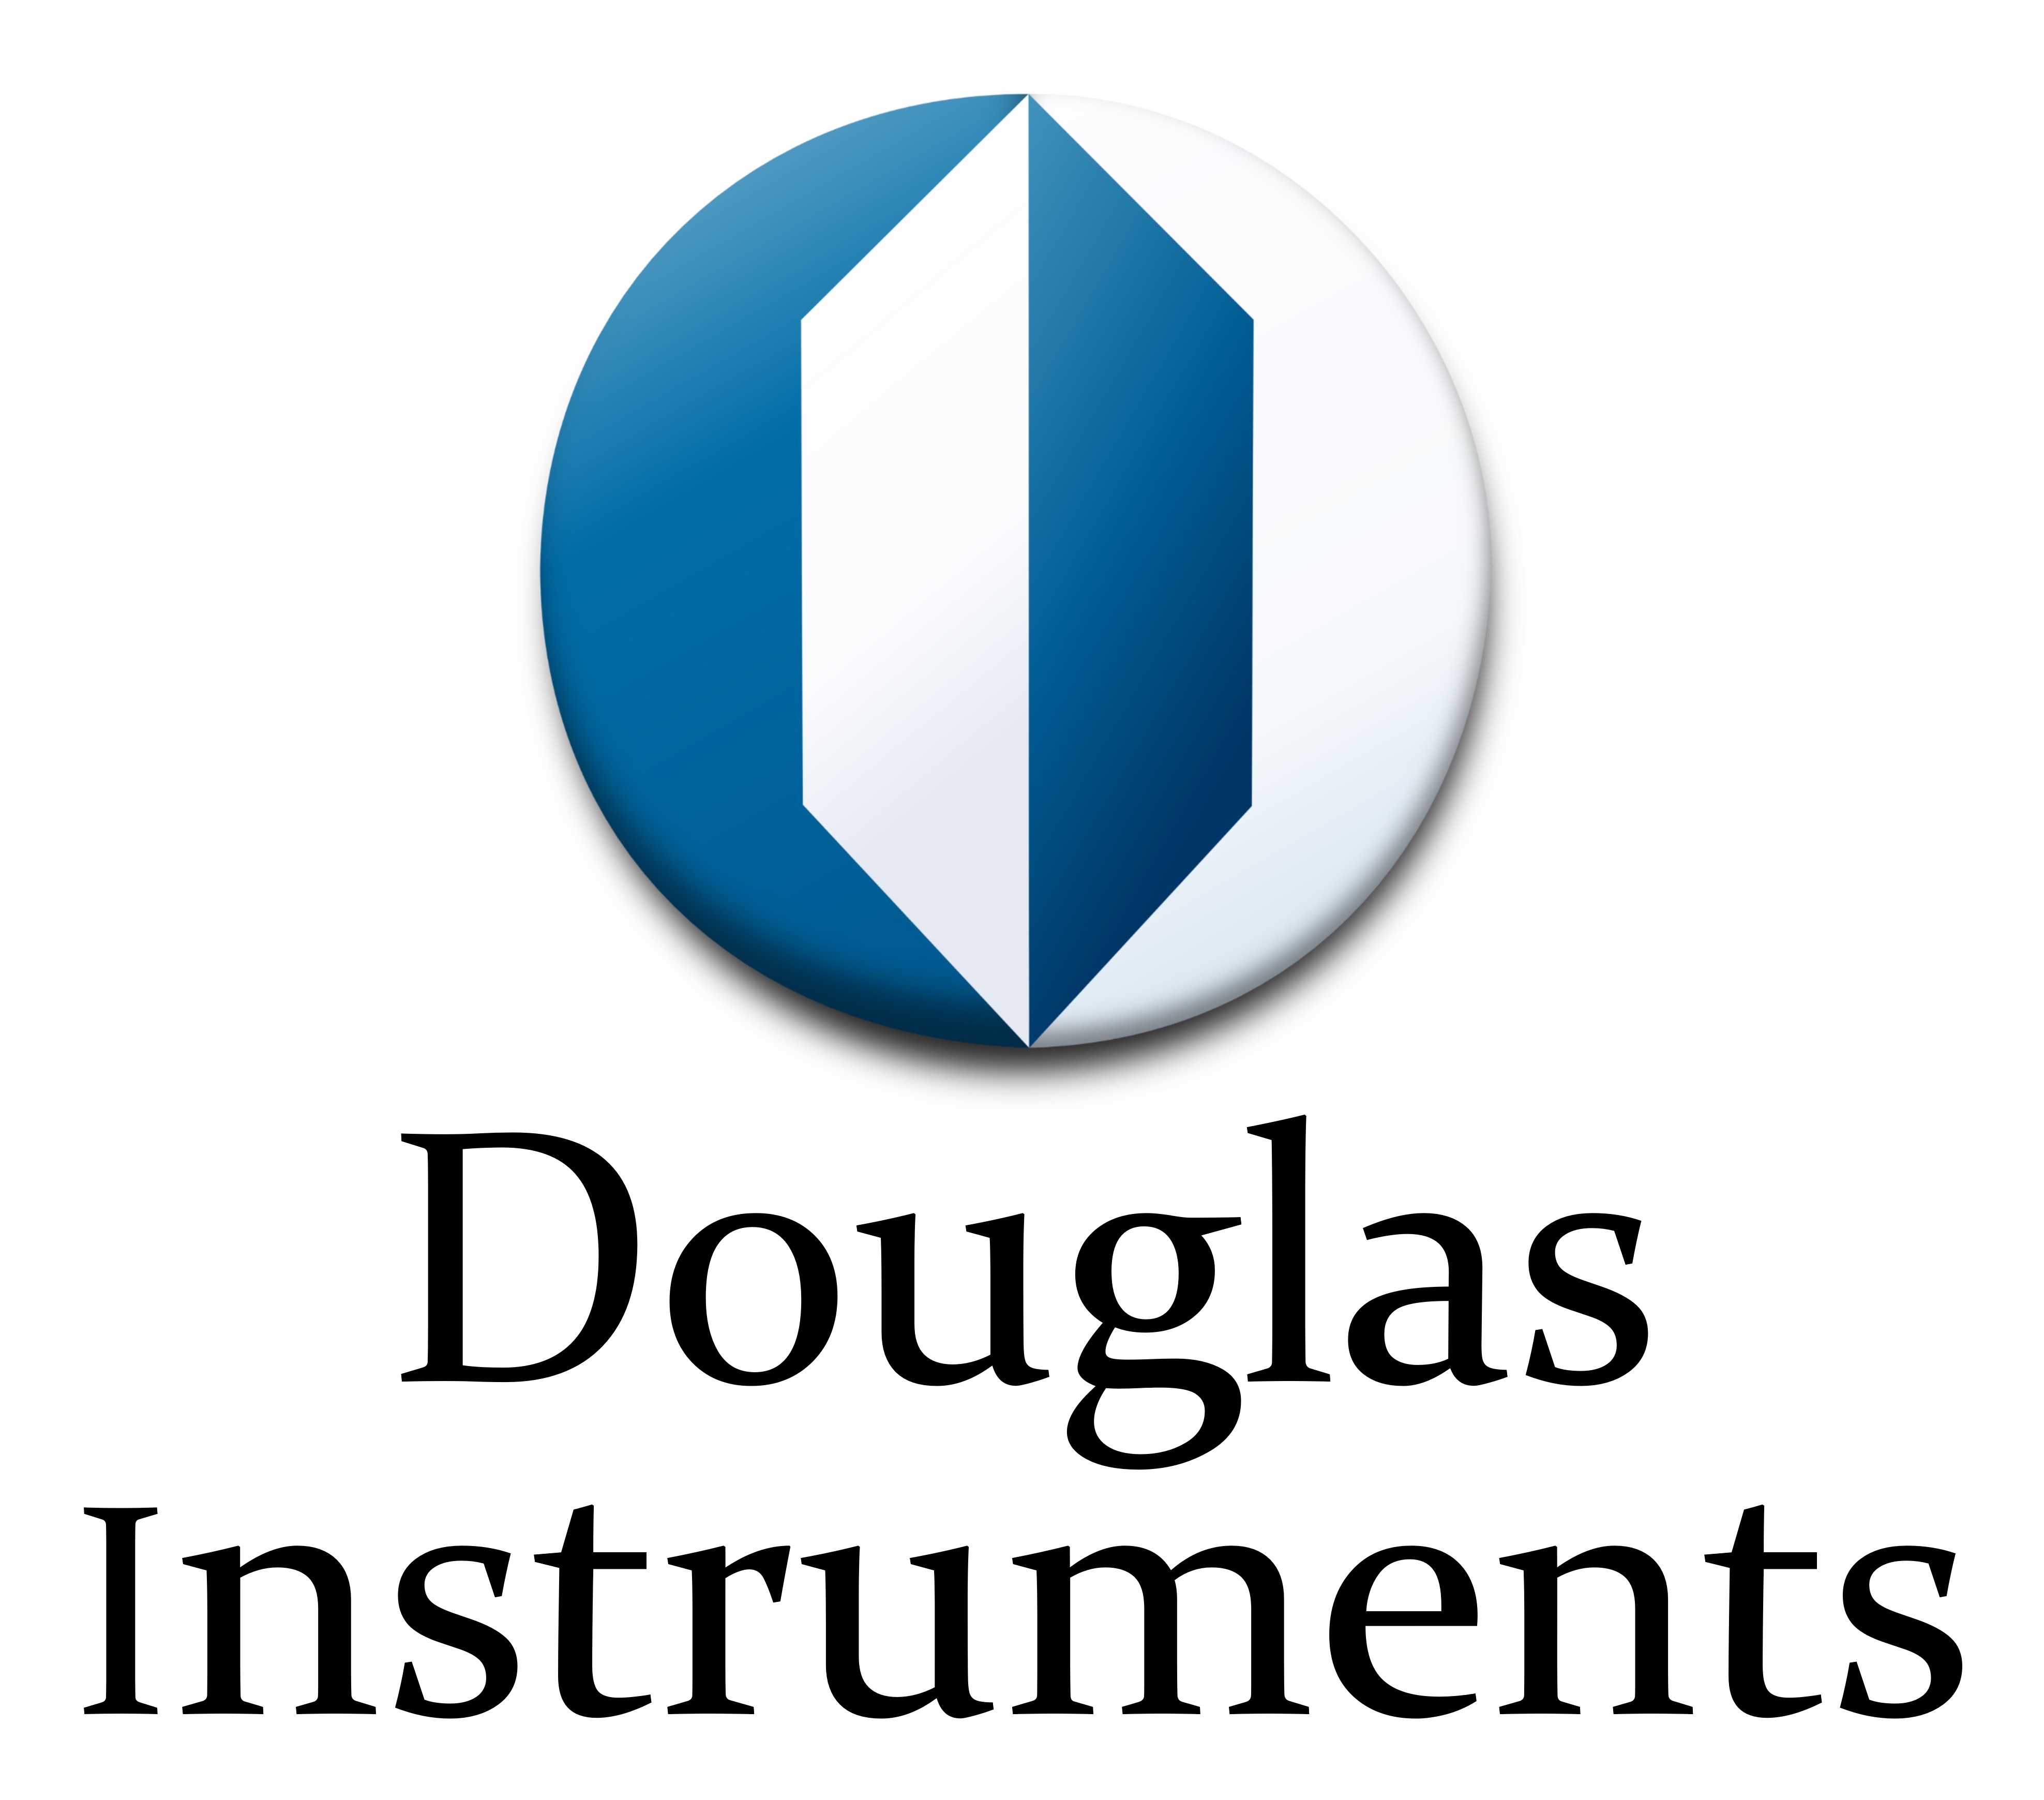 Douglas Instruments logo